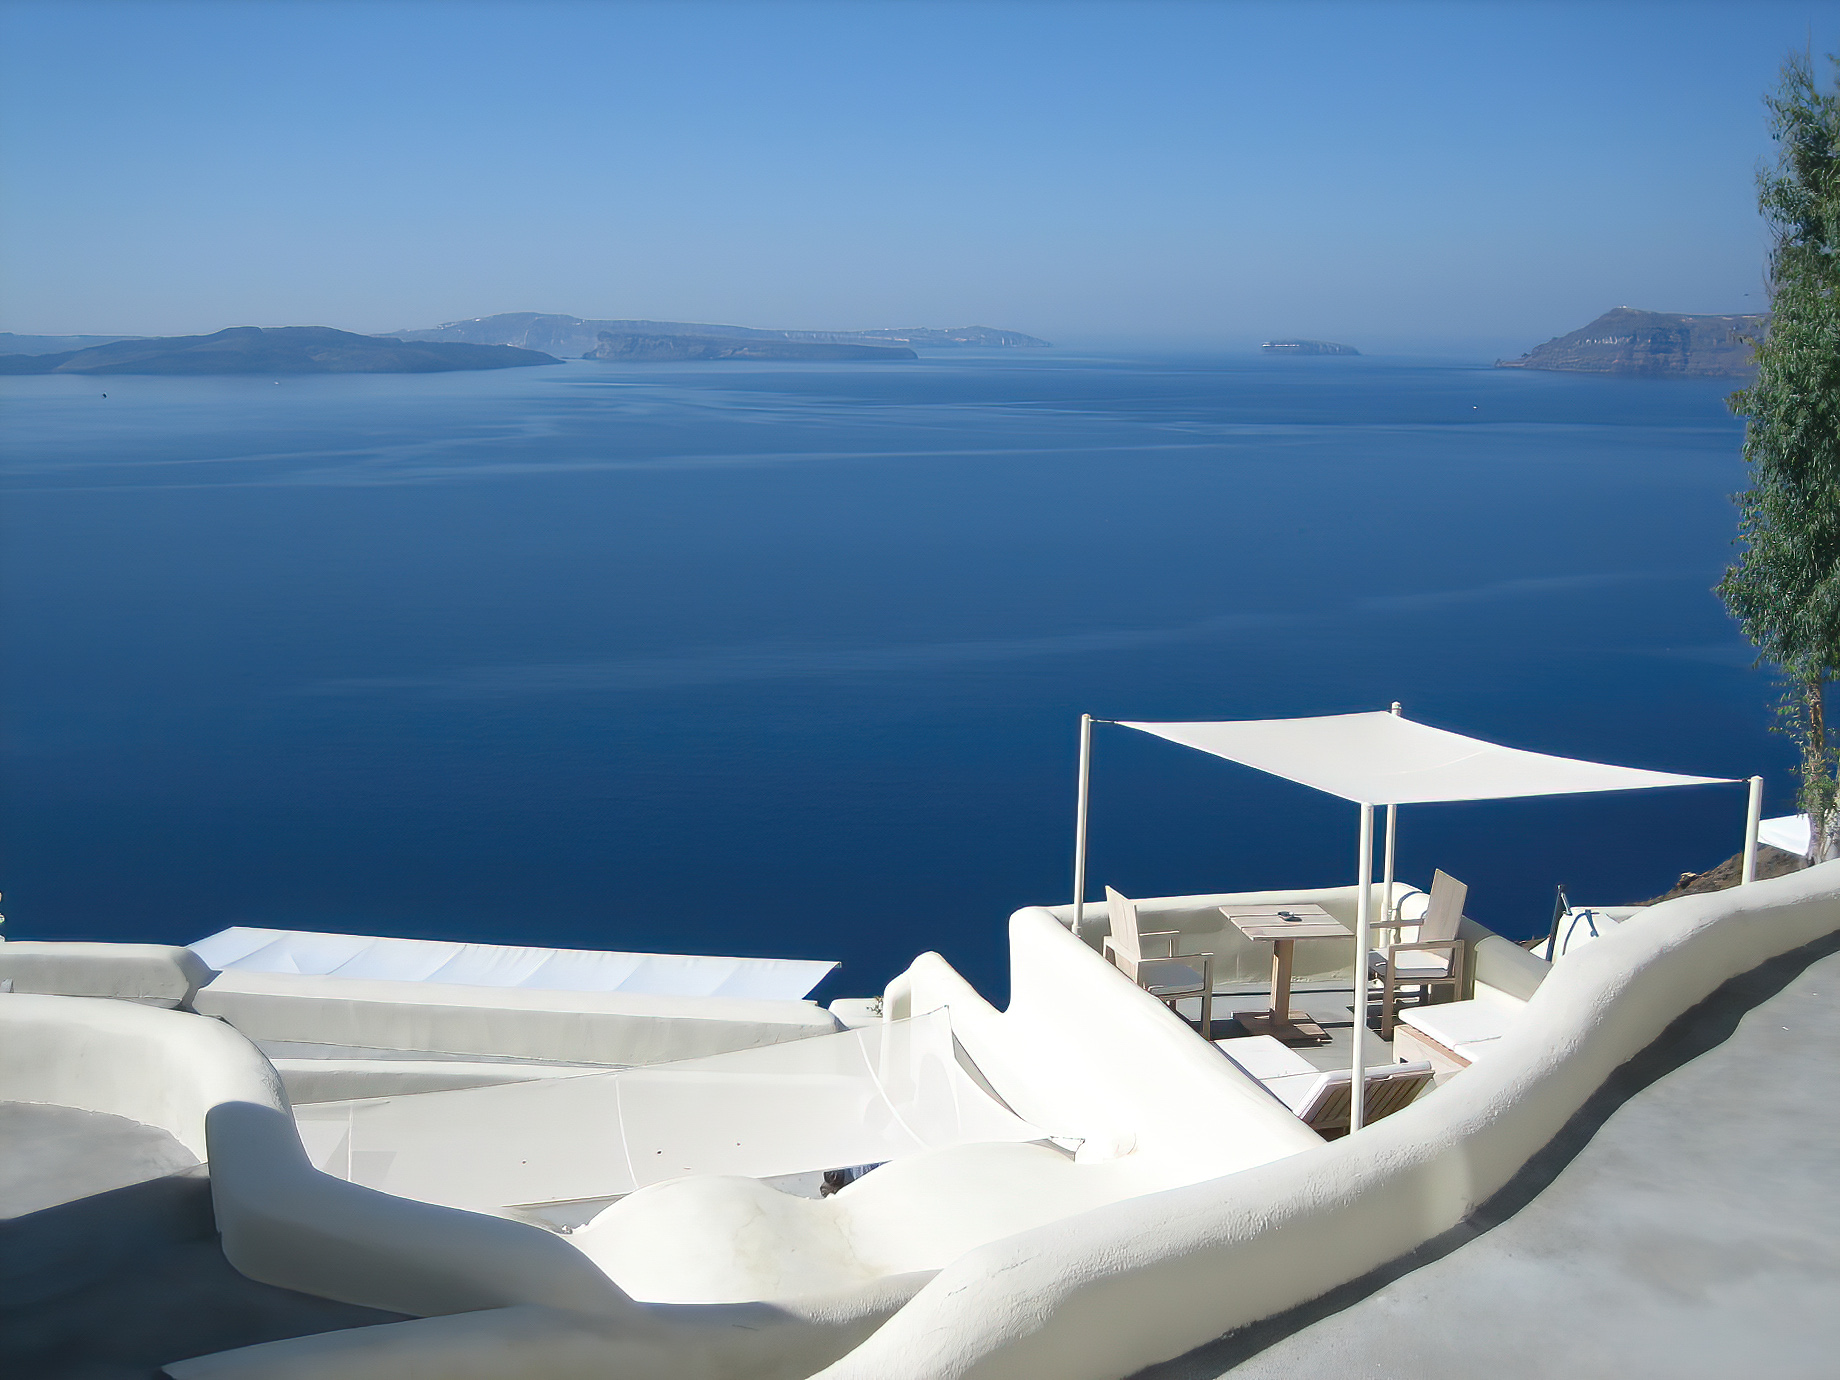 Mystique Hotel Santorini – Oia, Santorini Island, Greece - Mystique Ocean View Deck